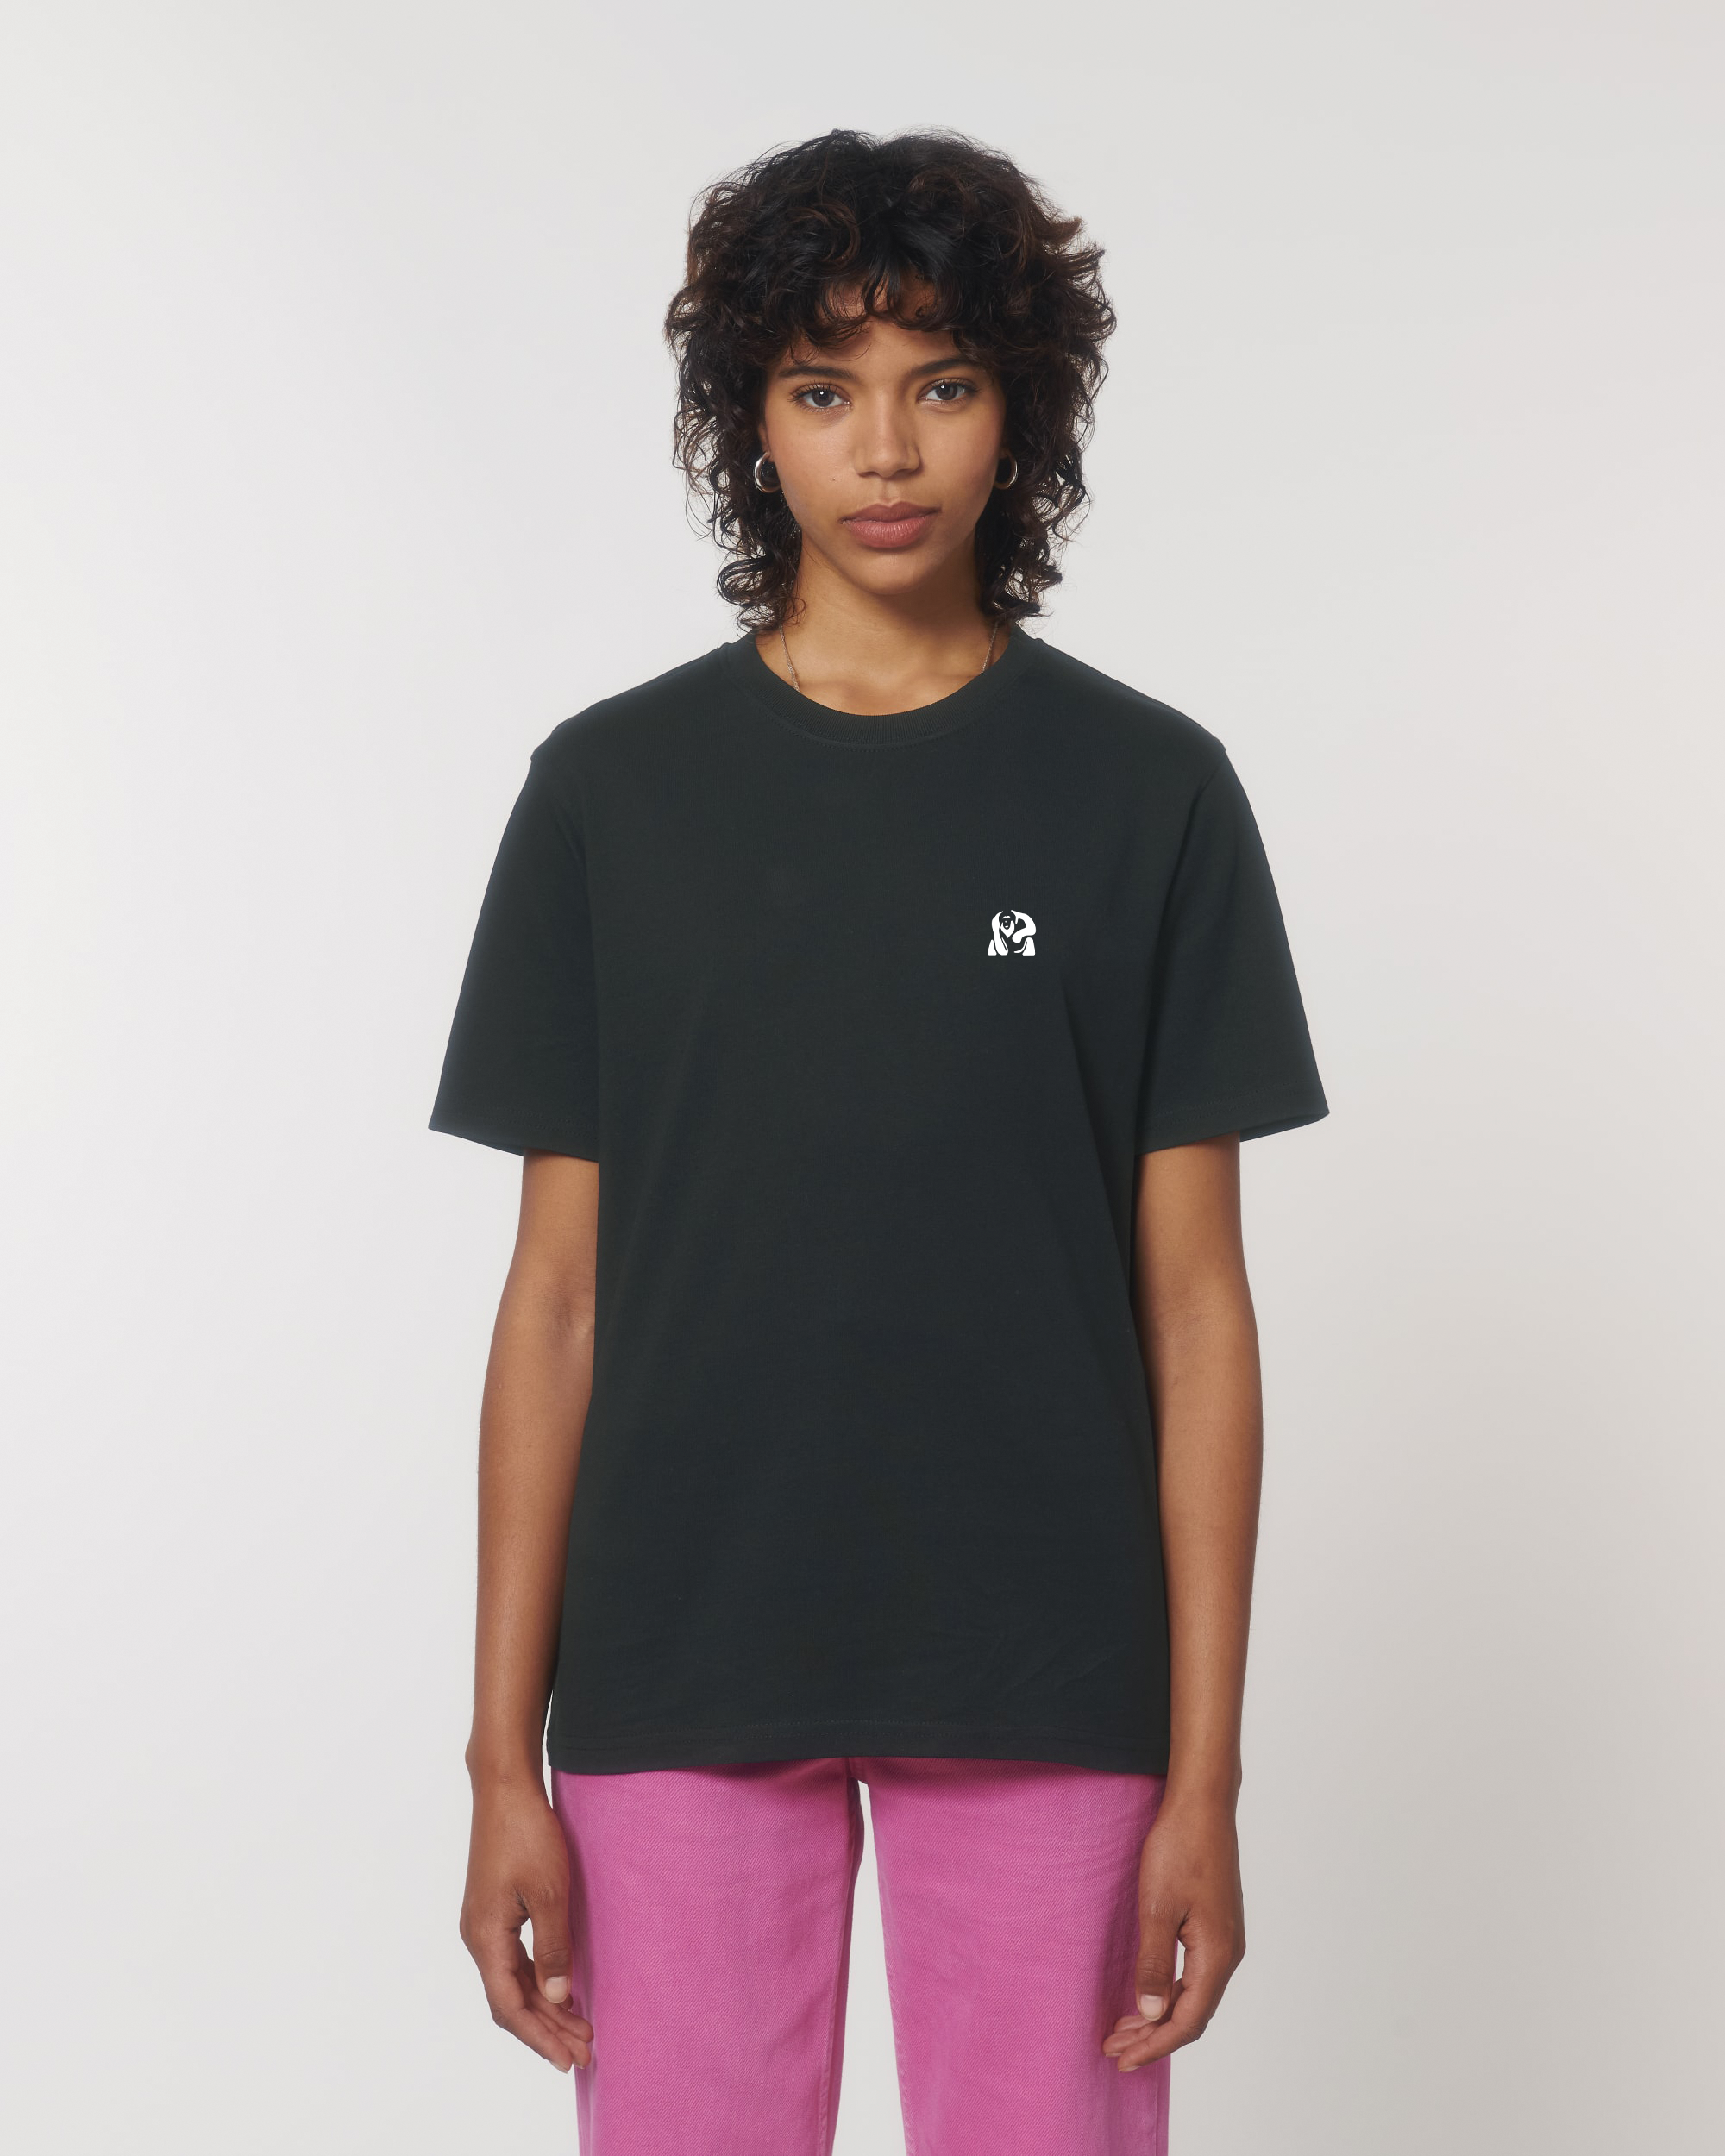 Thick unisex organic cotton t-shirt - Kilimanjaro